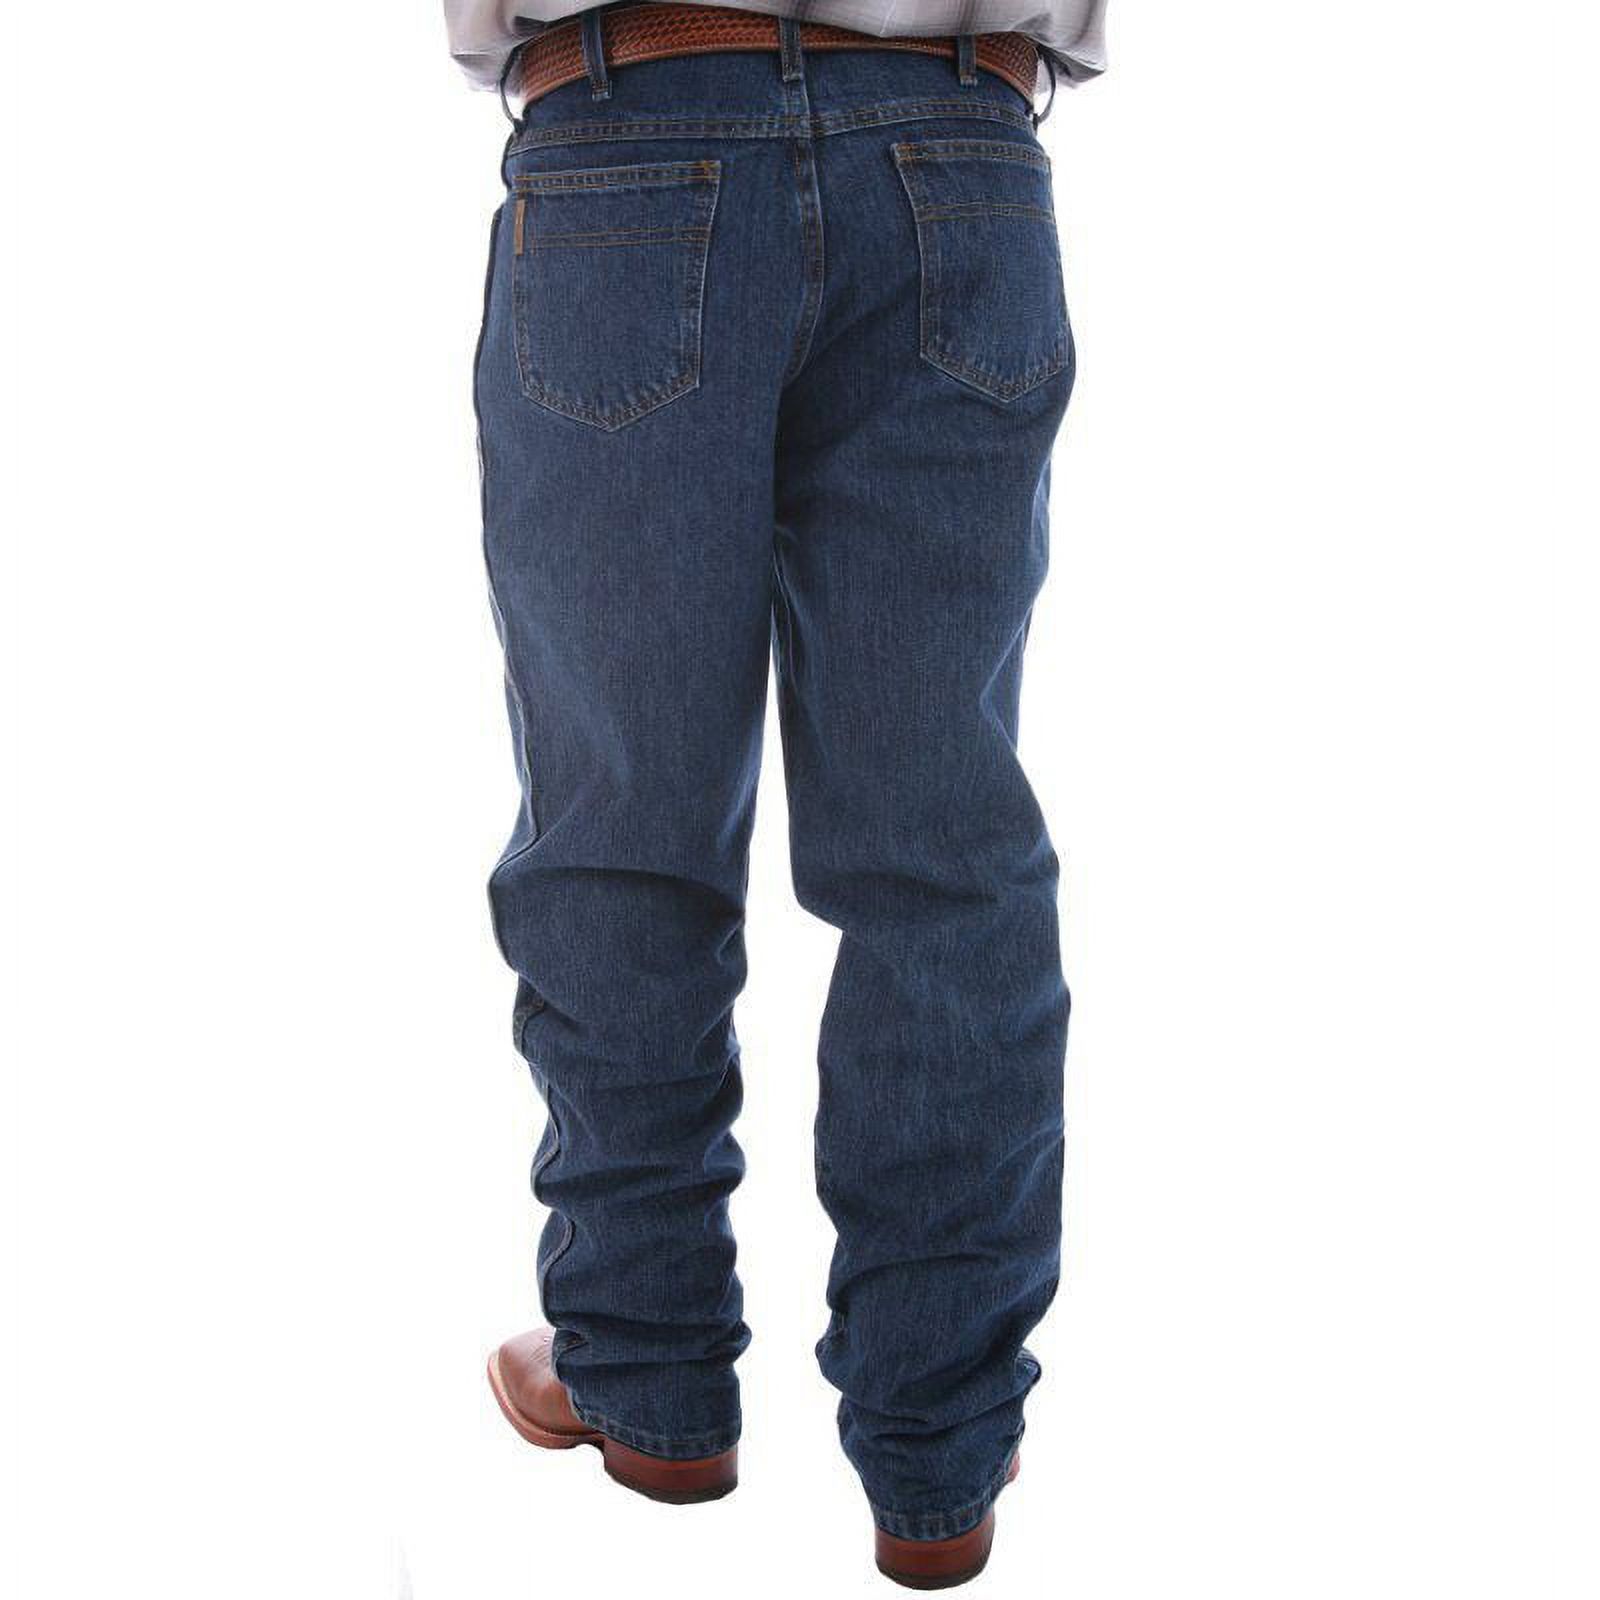 Cinch Apparel Mens Green Label Original Fit Jeans 40x36 Dark Stonewash - image 1 of 4